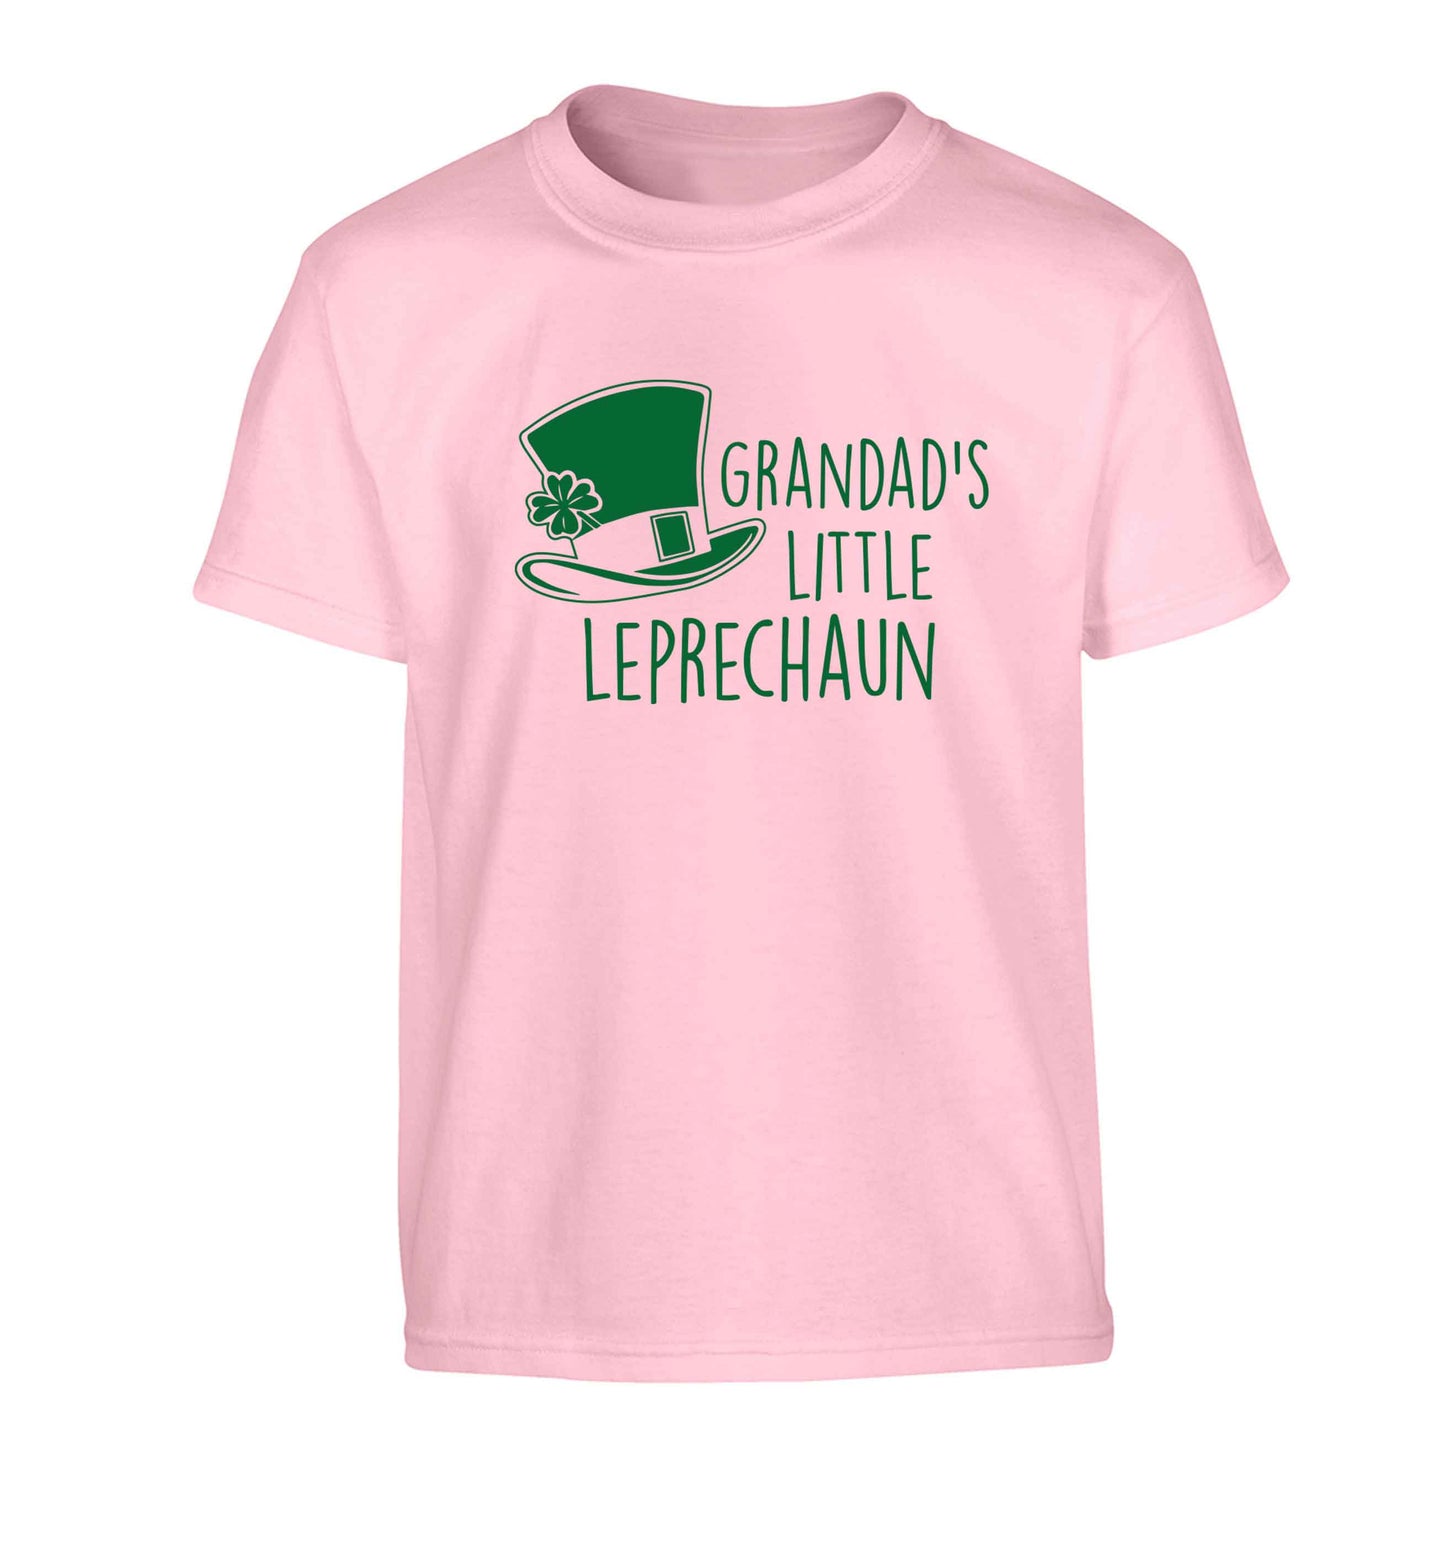 Grandad's little leprechaun Children's light pink Tshirt 12-13 Years